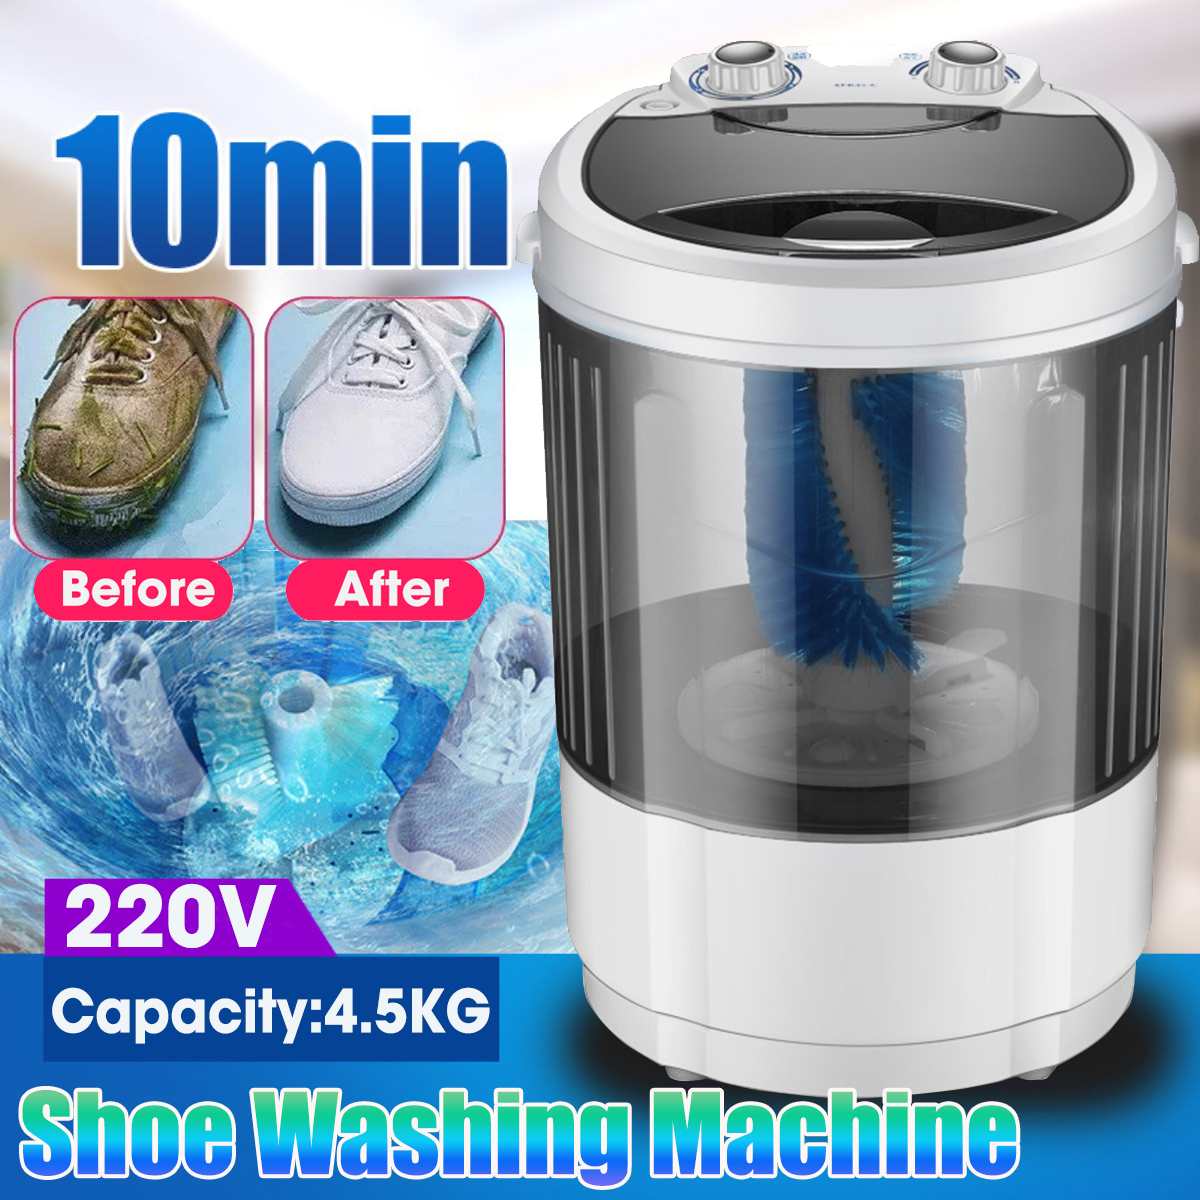 The smallest automatic washing machine 